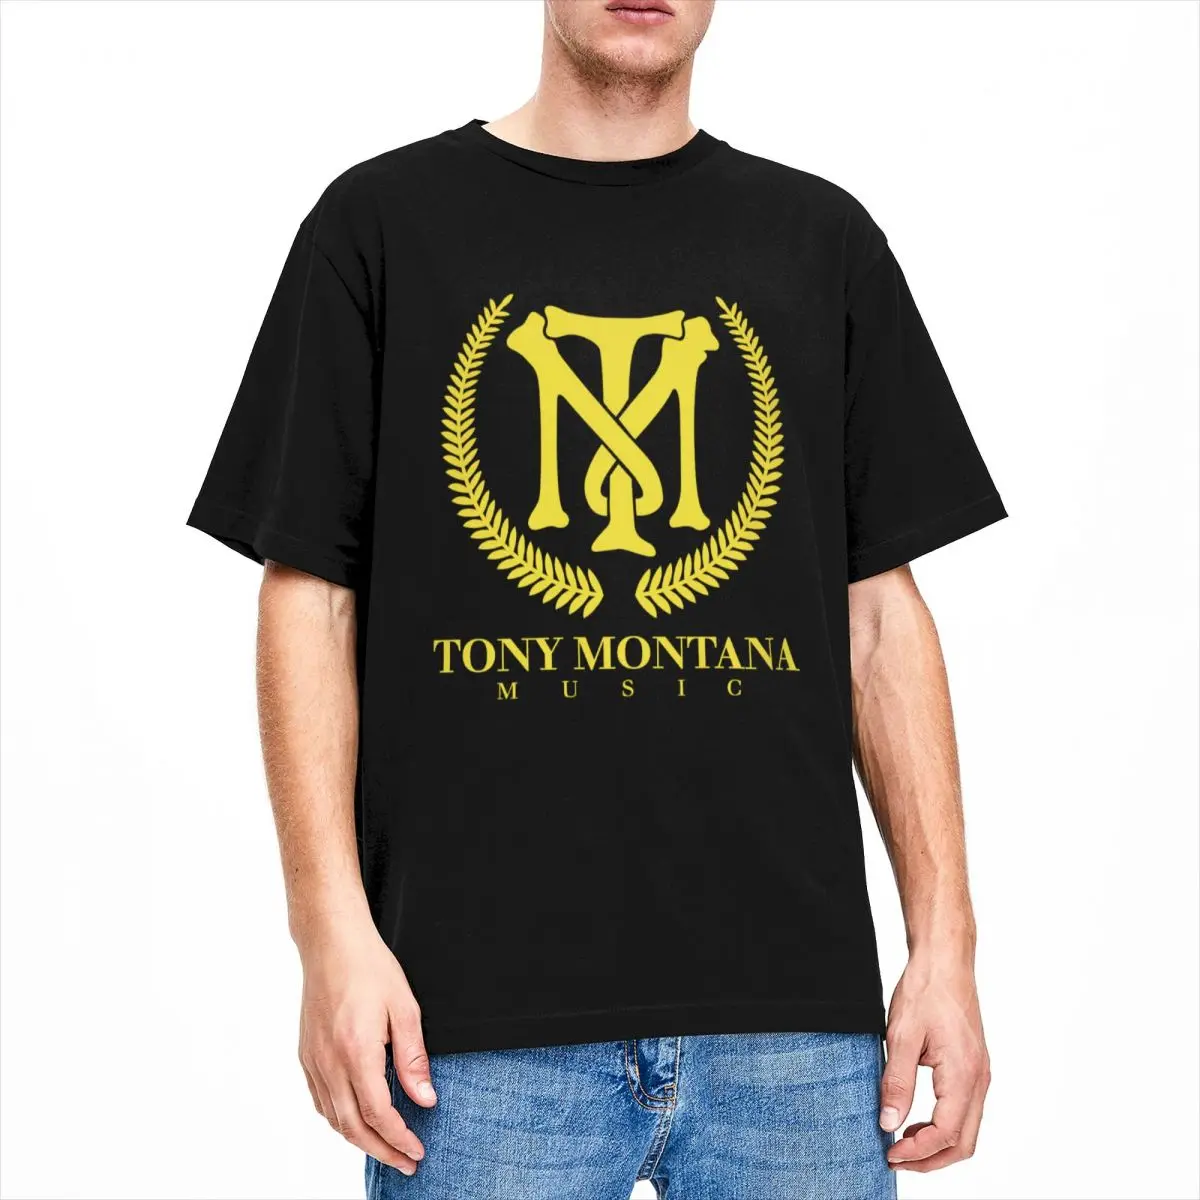 

Men Women's Shirt Tony Montana Music Merch Awesome Cotton Short Sleeve T Shirts Round Neck Tops Gift Idea